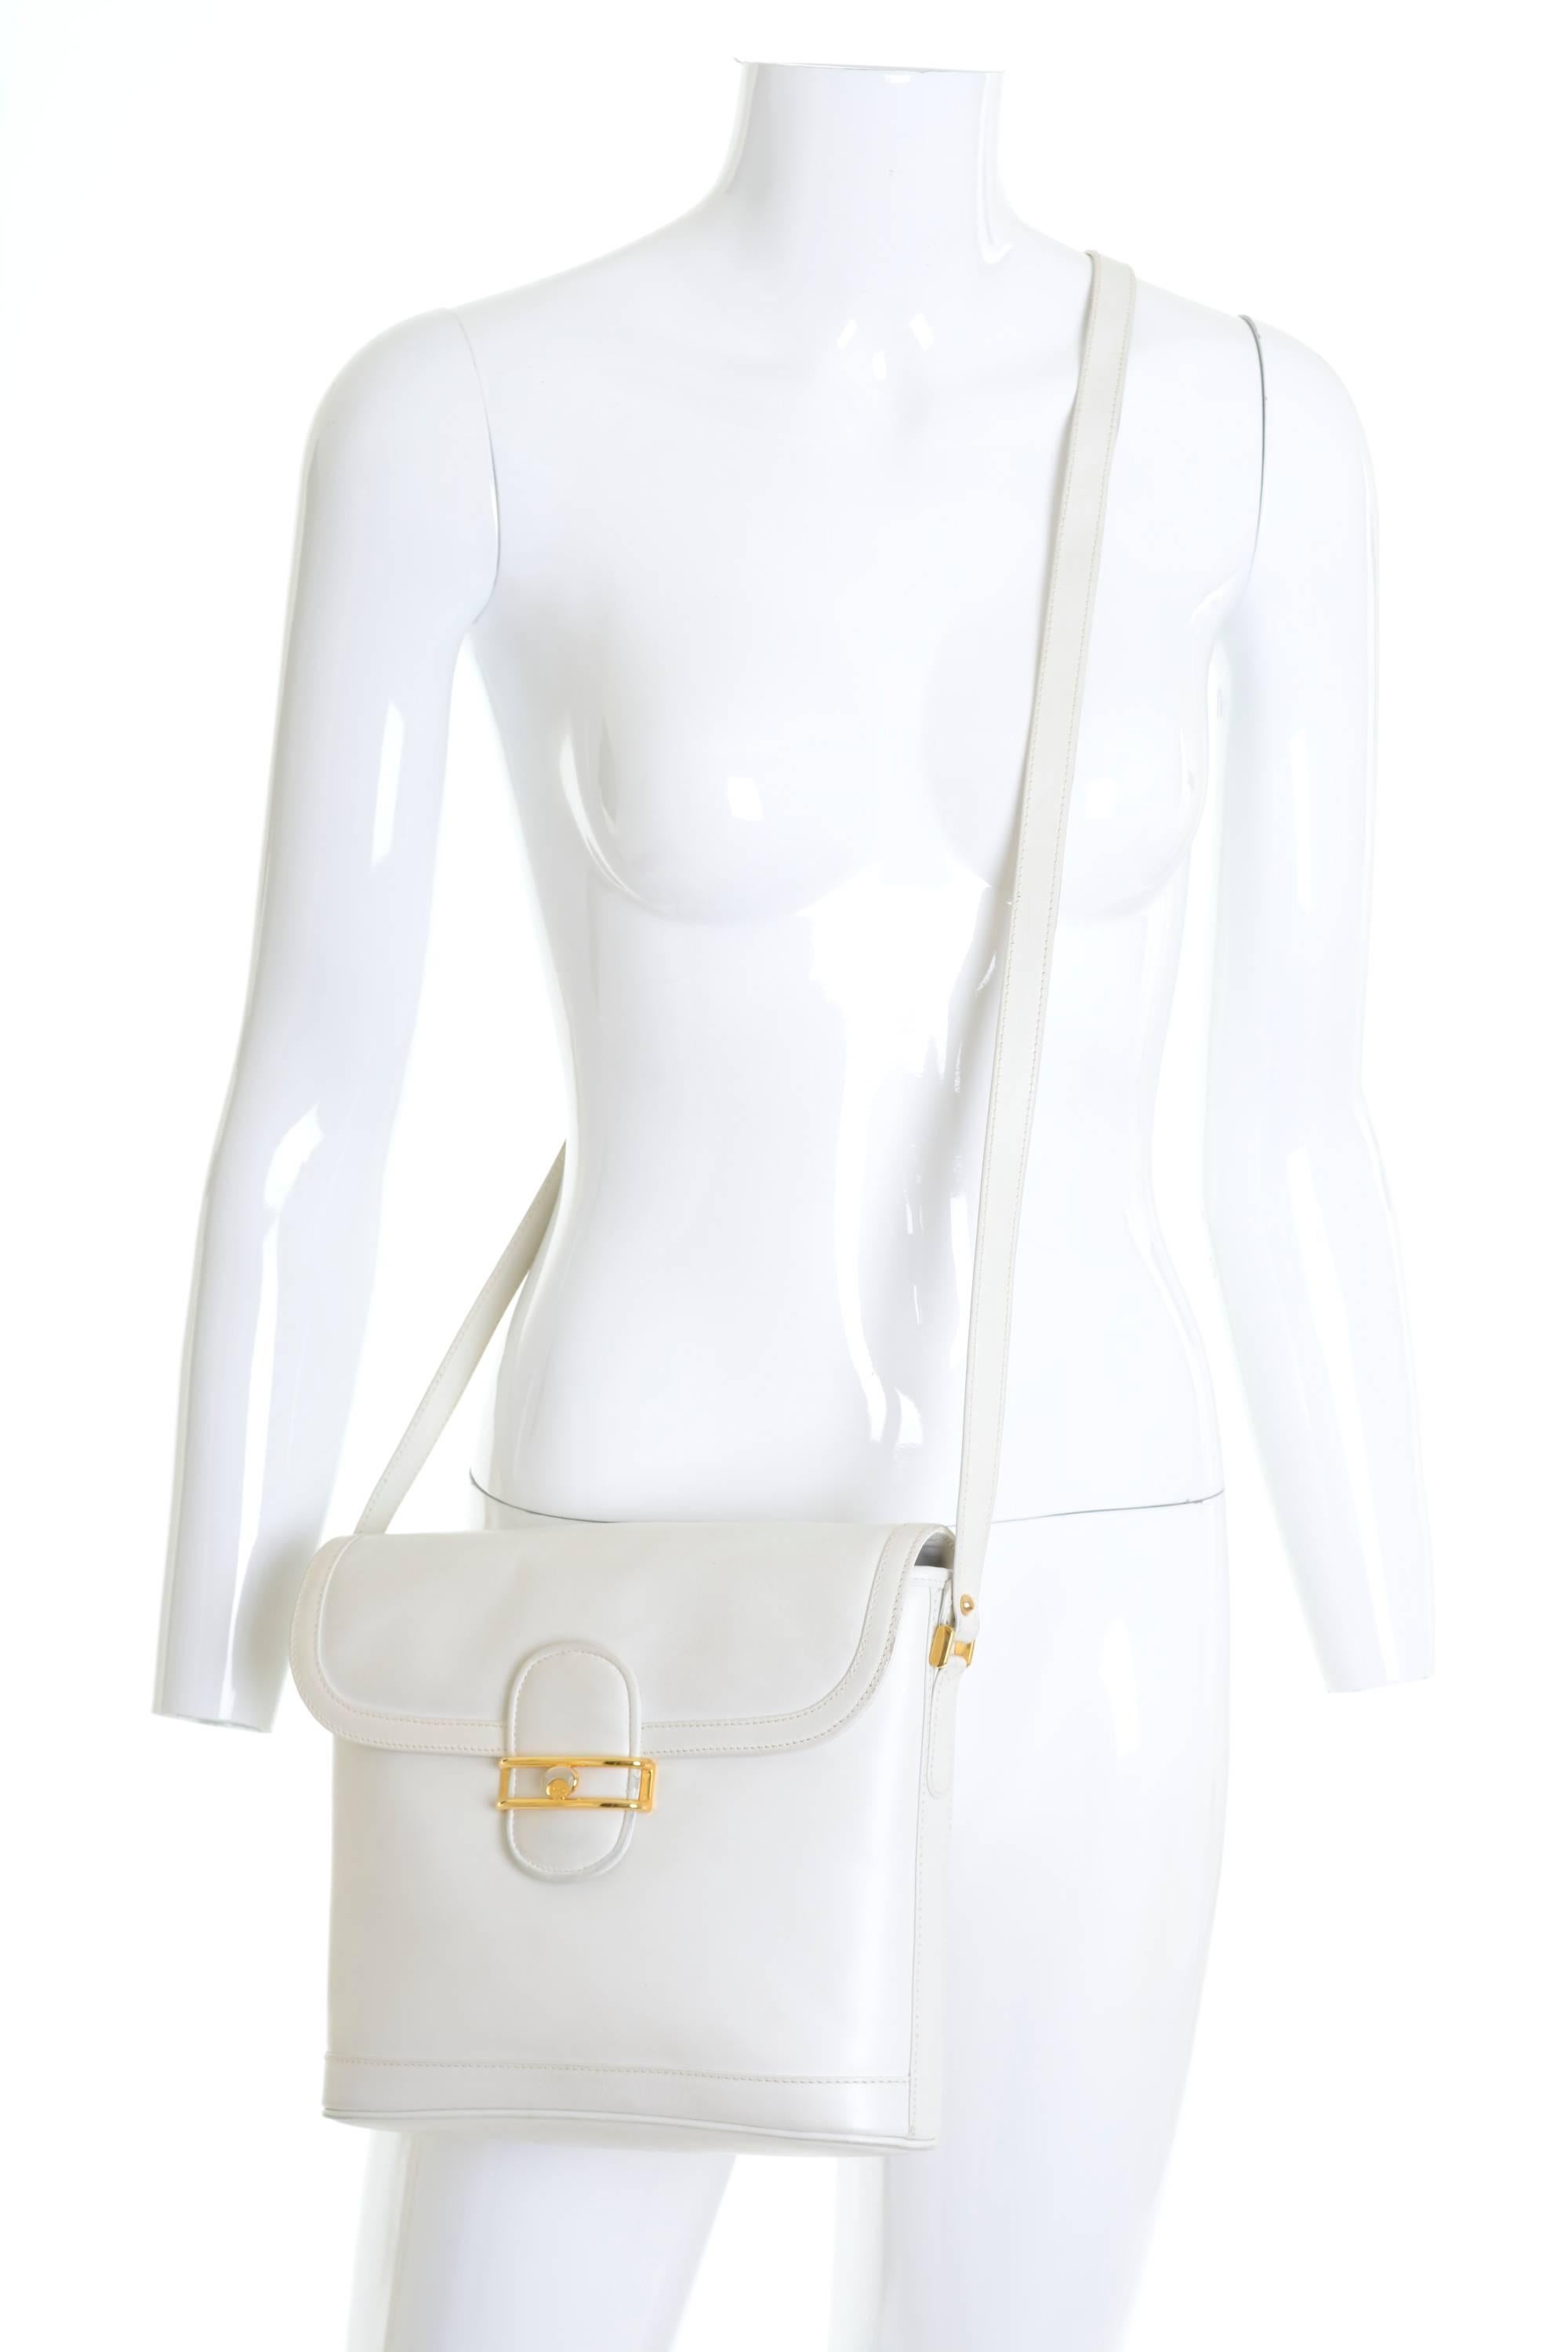 Women's 1970s GUCCI Authentic Rare White Leather Shoulder Bag